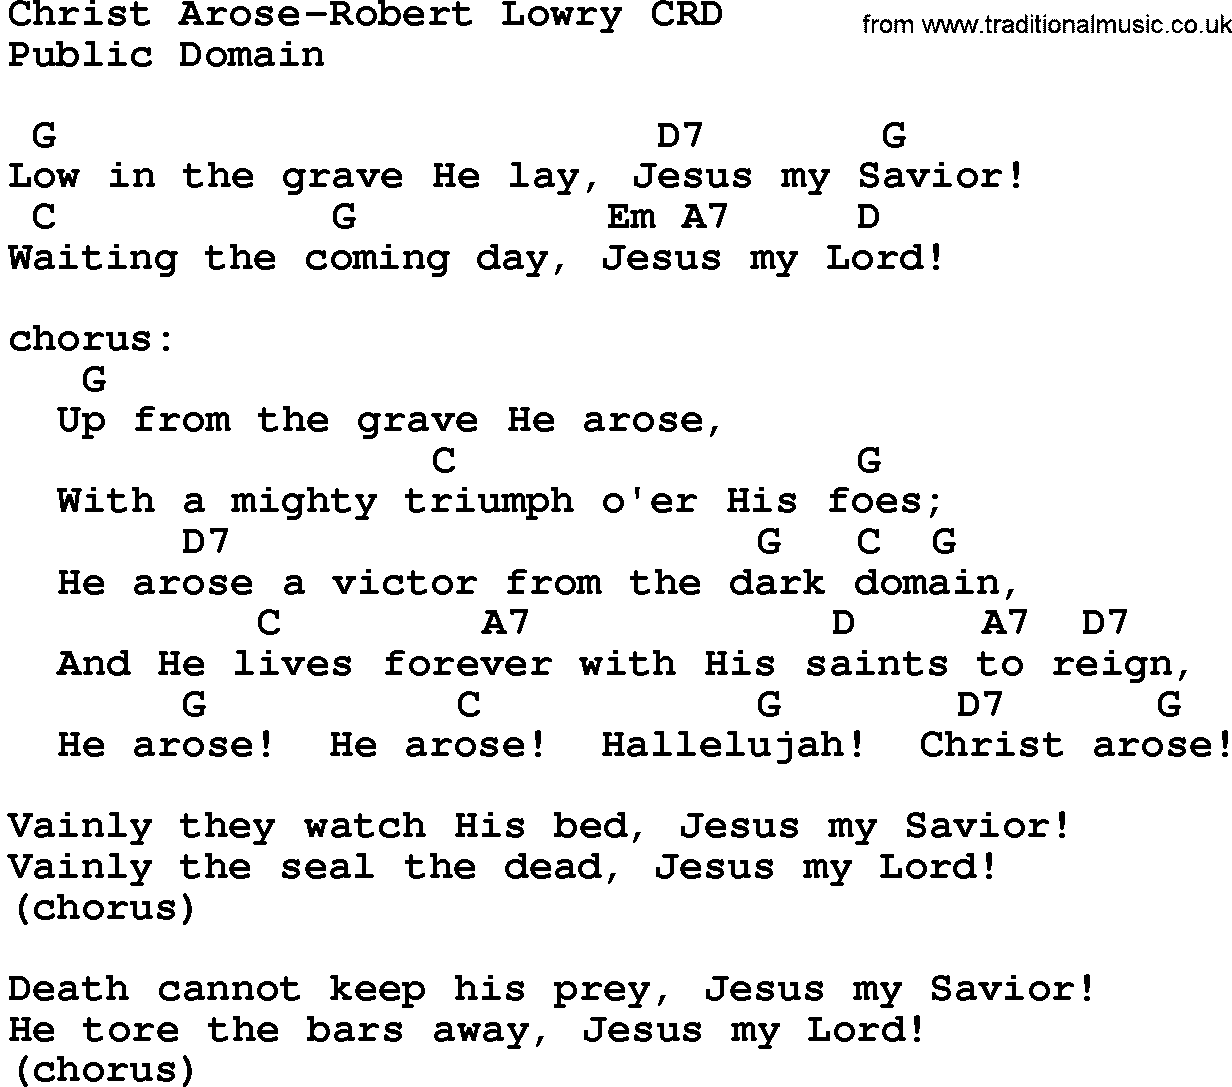 Gospel Song: Christ Arose-Robert Lowry, lyrics and chords.